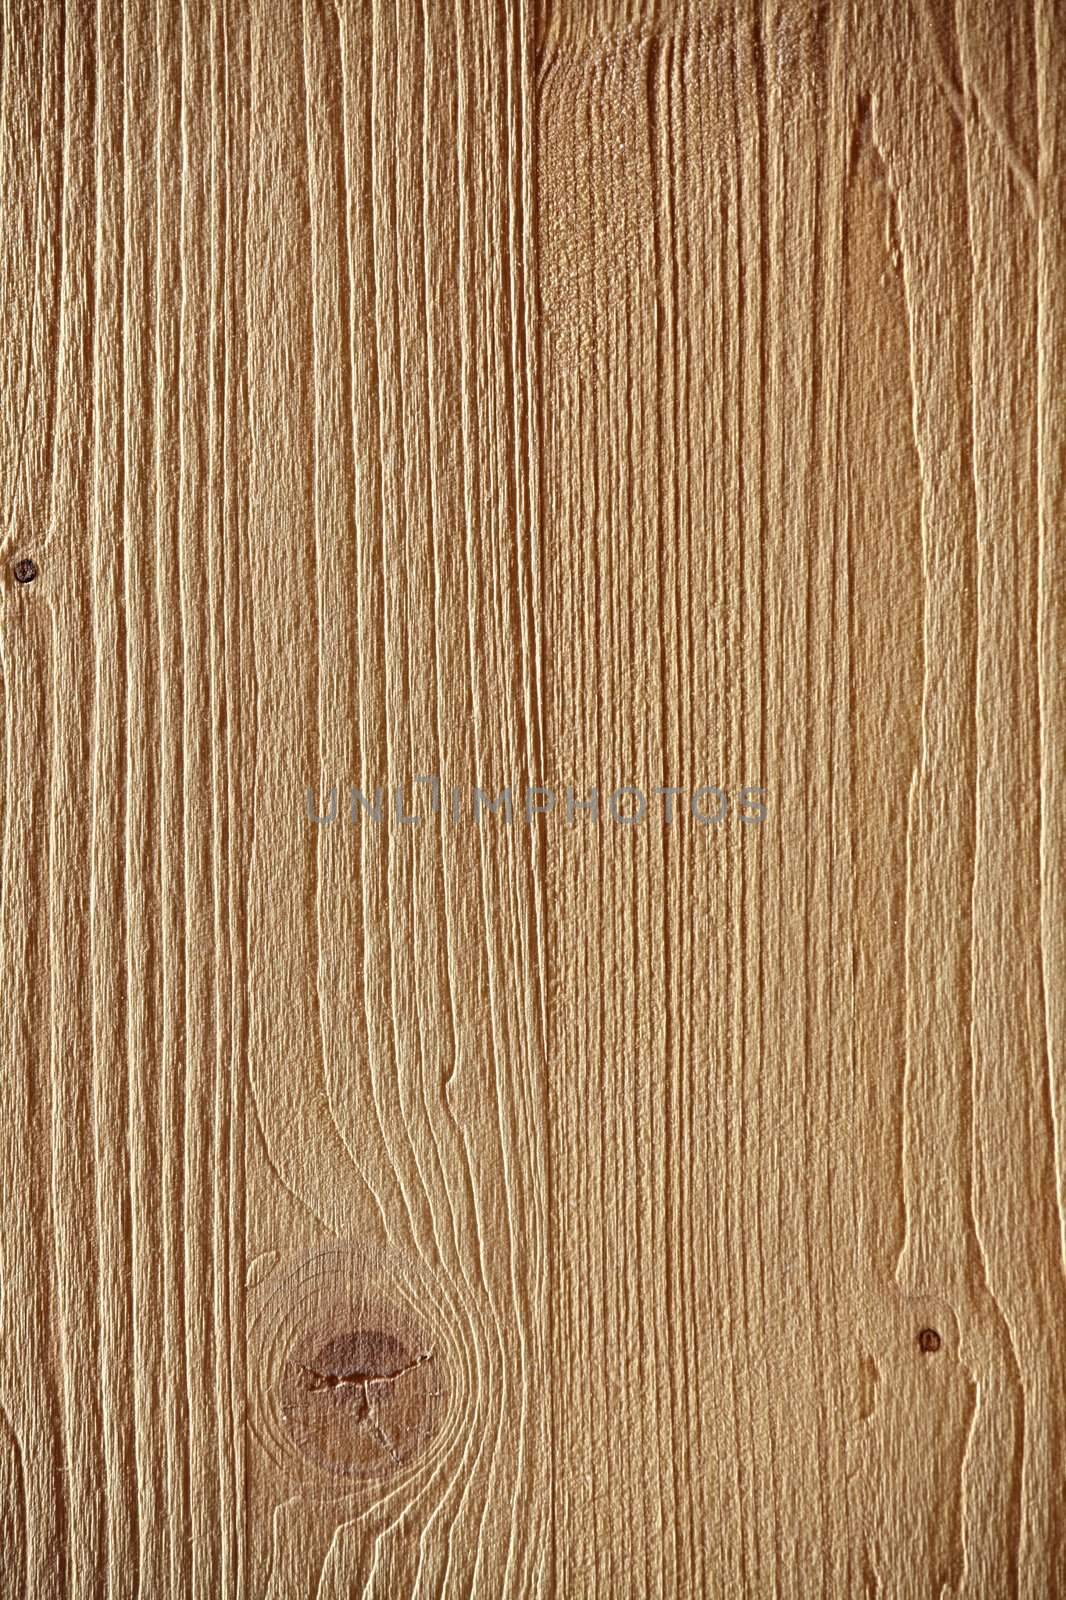 Wooden lumber background texture, bright detail